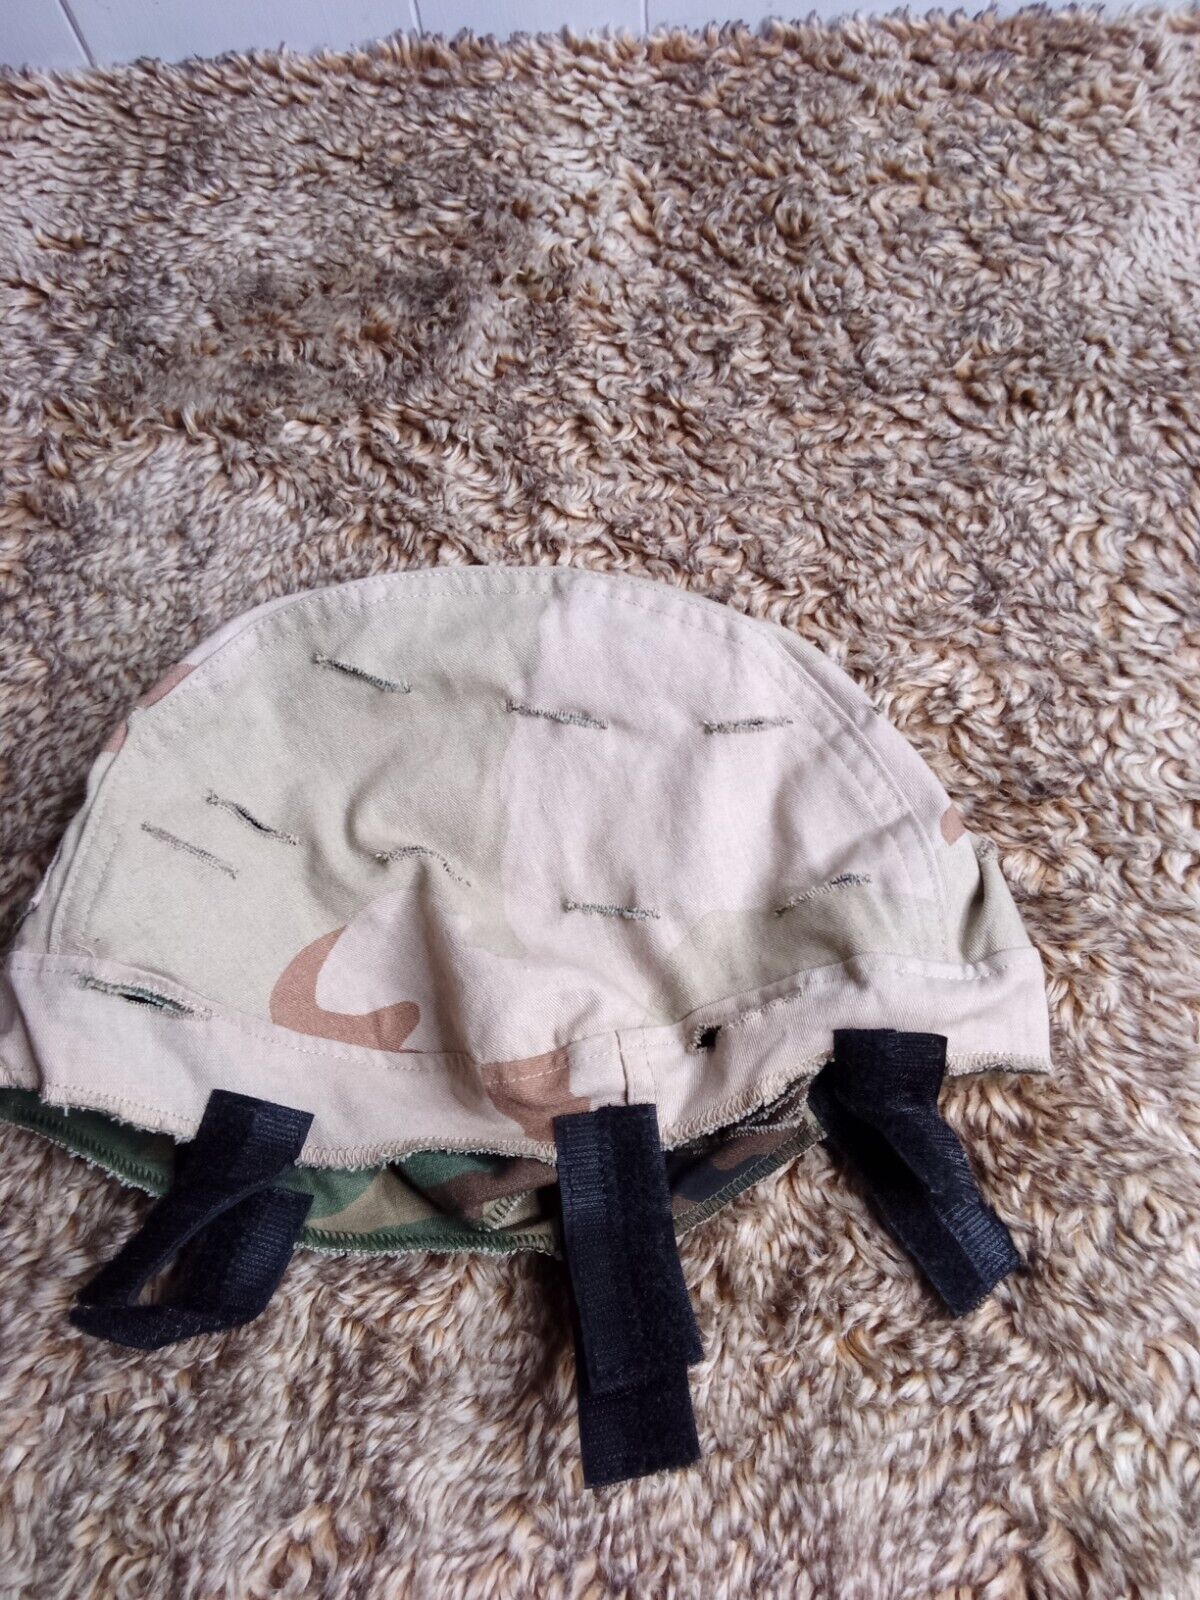 MSA Reversible Desert Camo / M81 Woodland Military Helmet Cover Size M/L